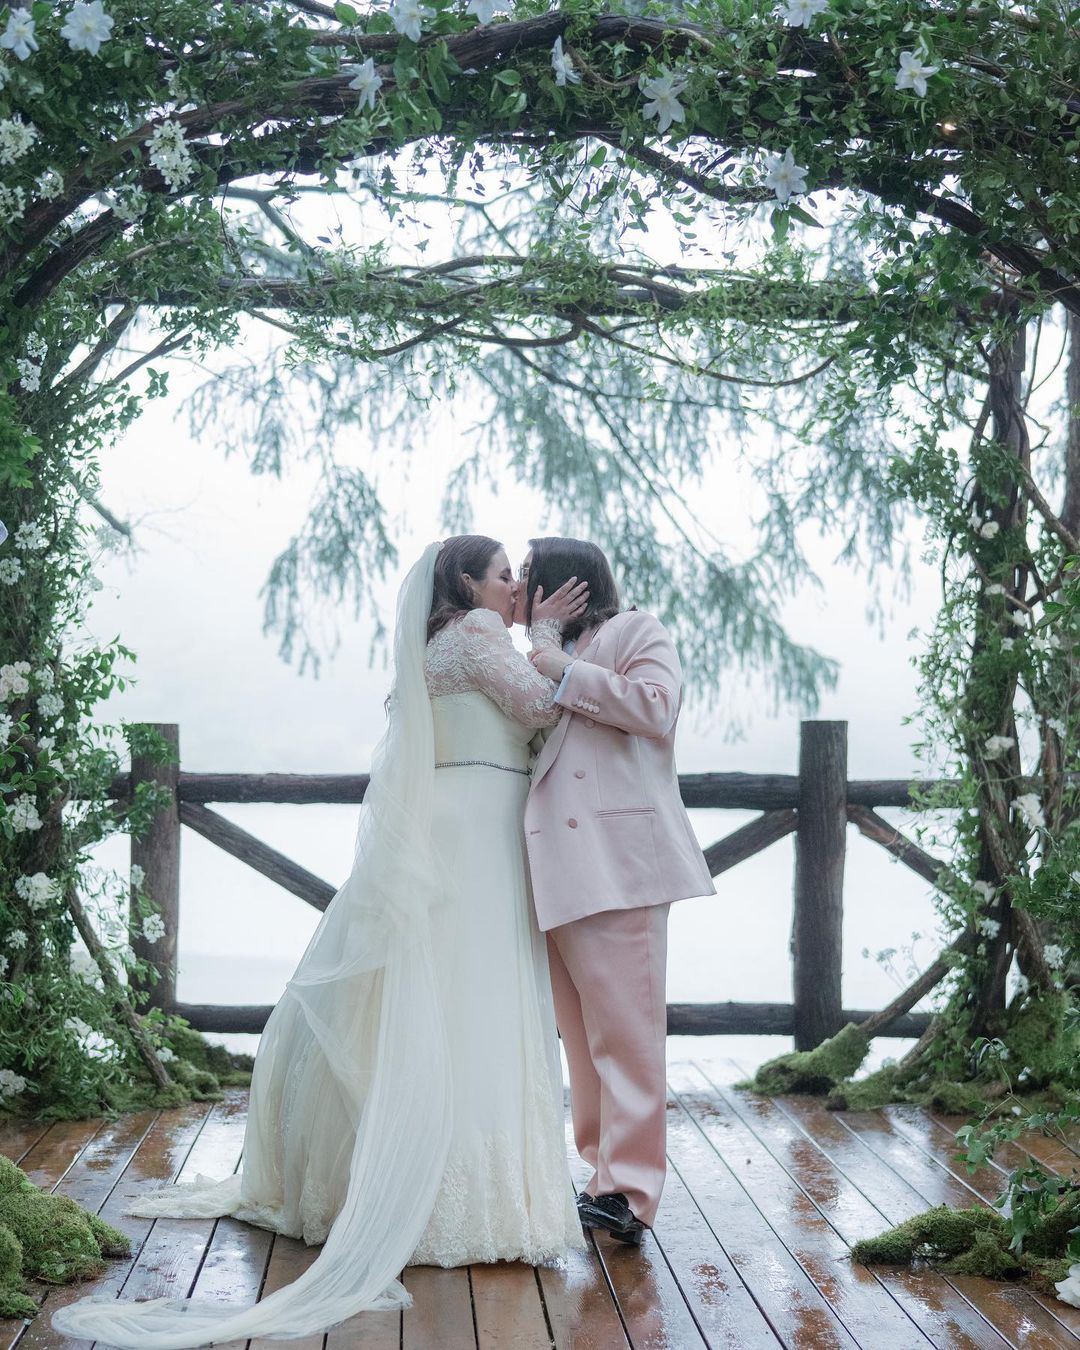 Beanie Feldstein and Bonnie-Chance Roberts' first kiss as a married couple.